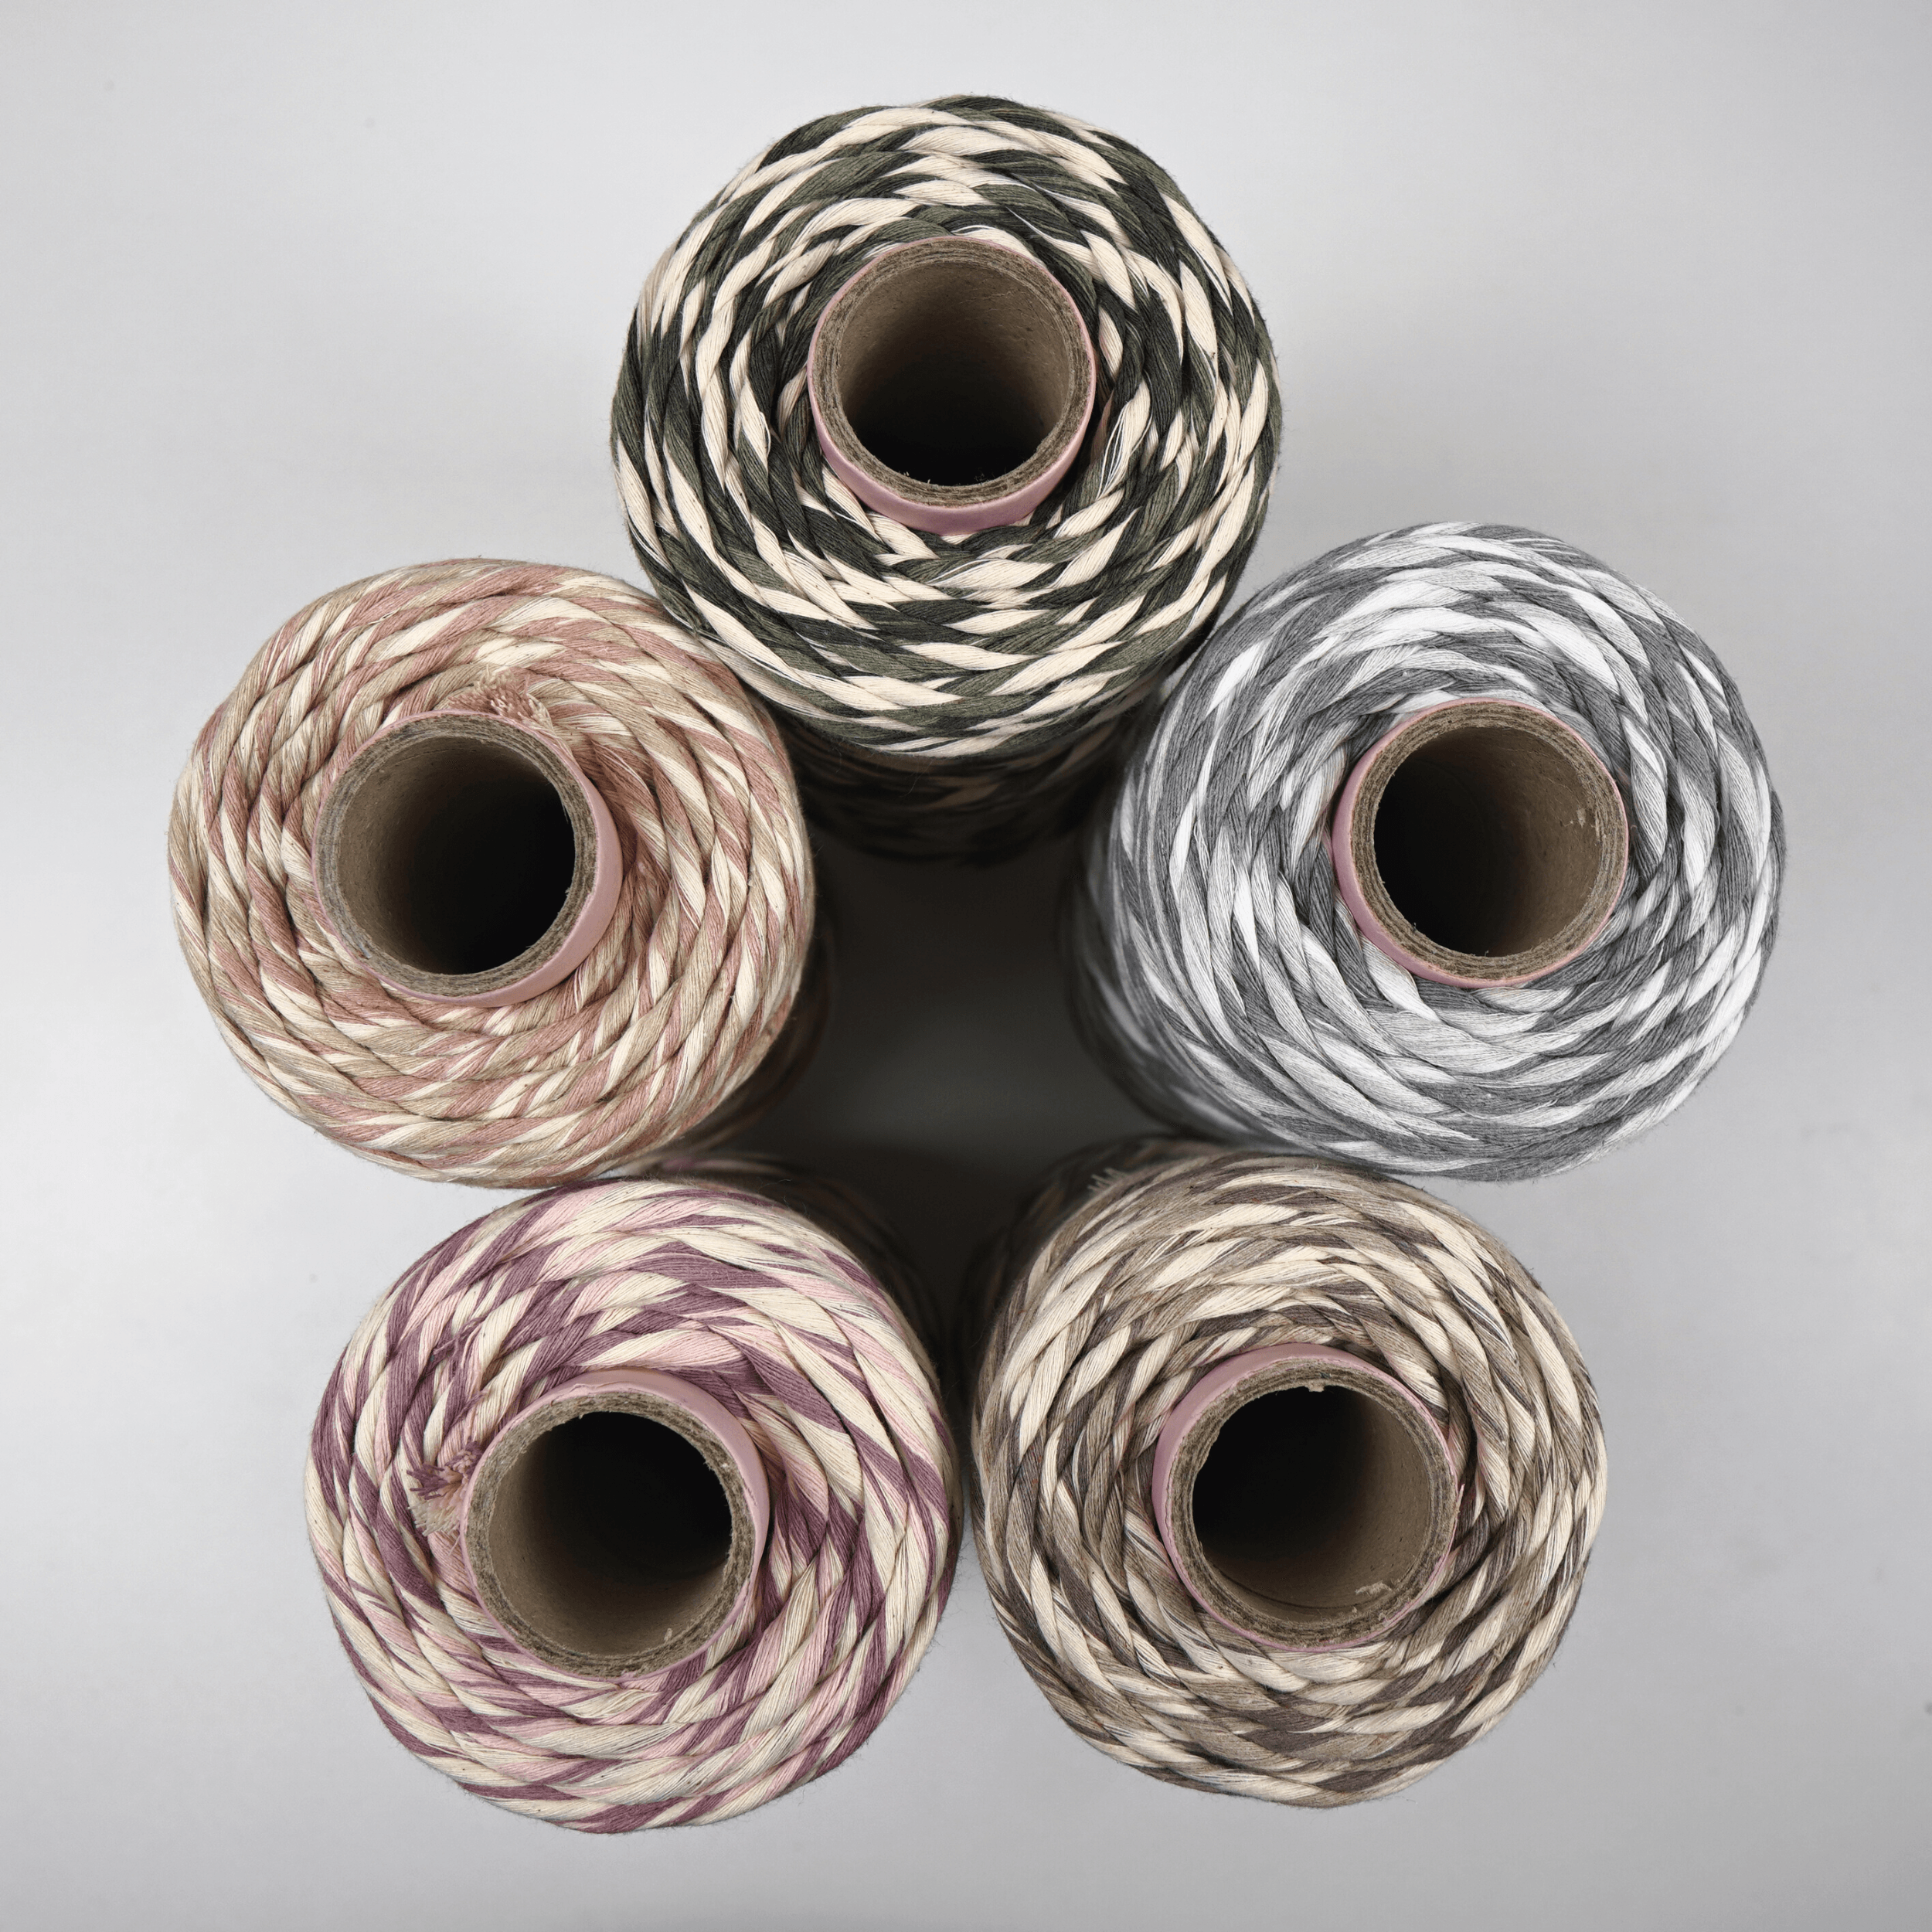 BOCHIKNOT Macrame LUSH 5mm Color Swirls Single Strand Cord (105yds) –  Bochiknot